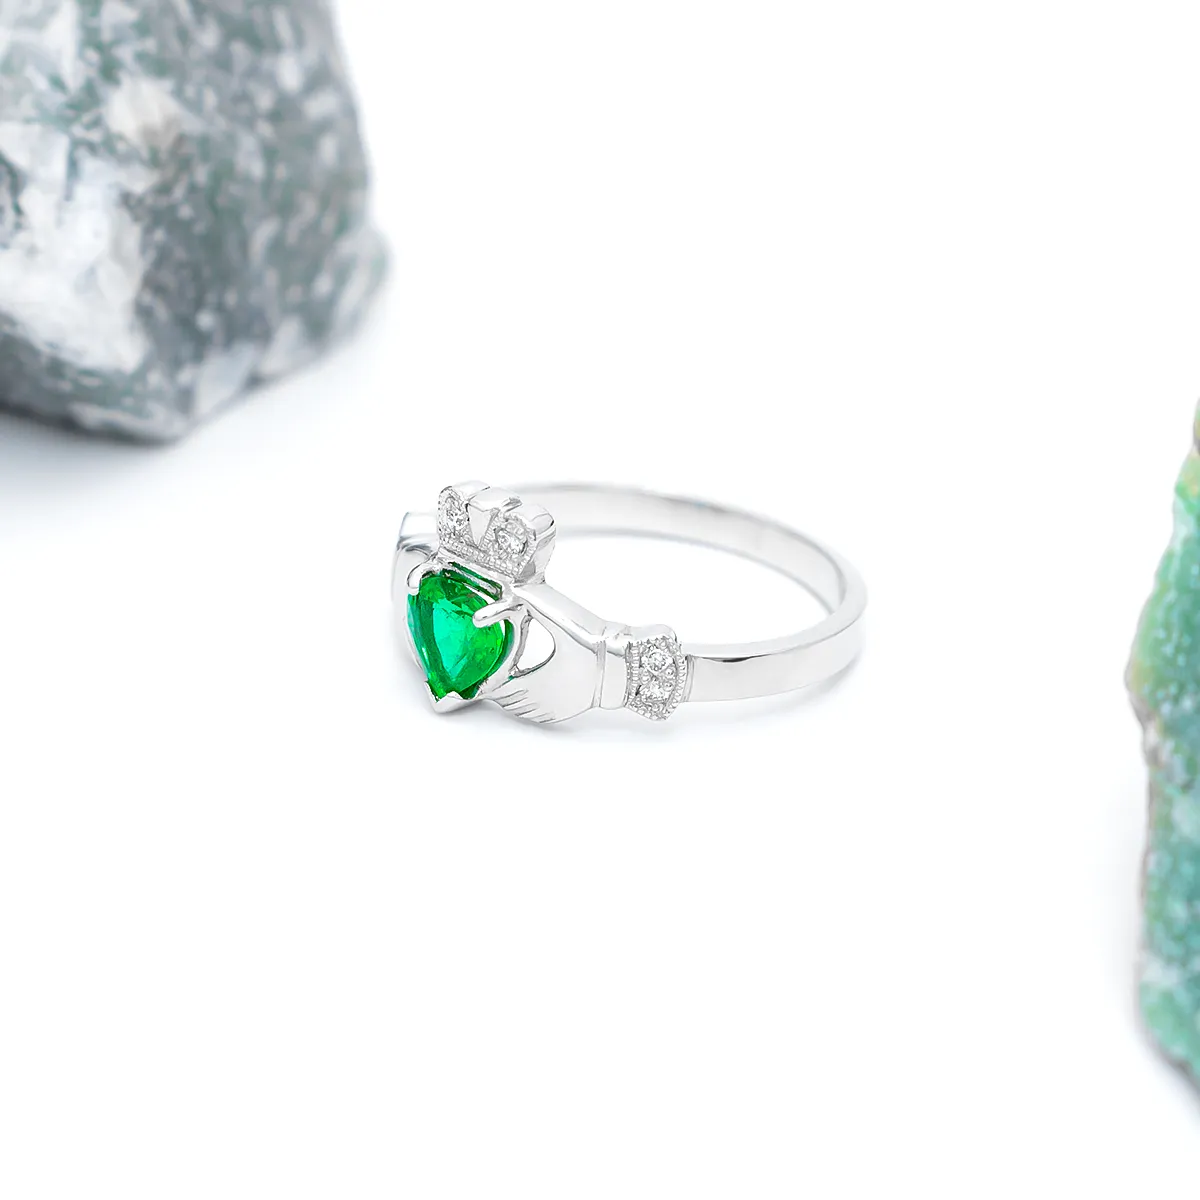 Elegantly Designed Claddagh Ring Featuring A Glistening Heart-shaped Emerald 